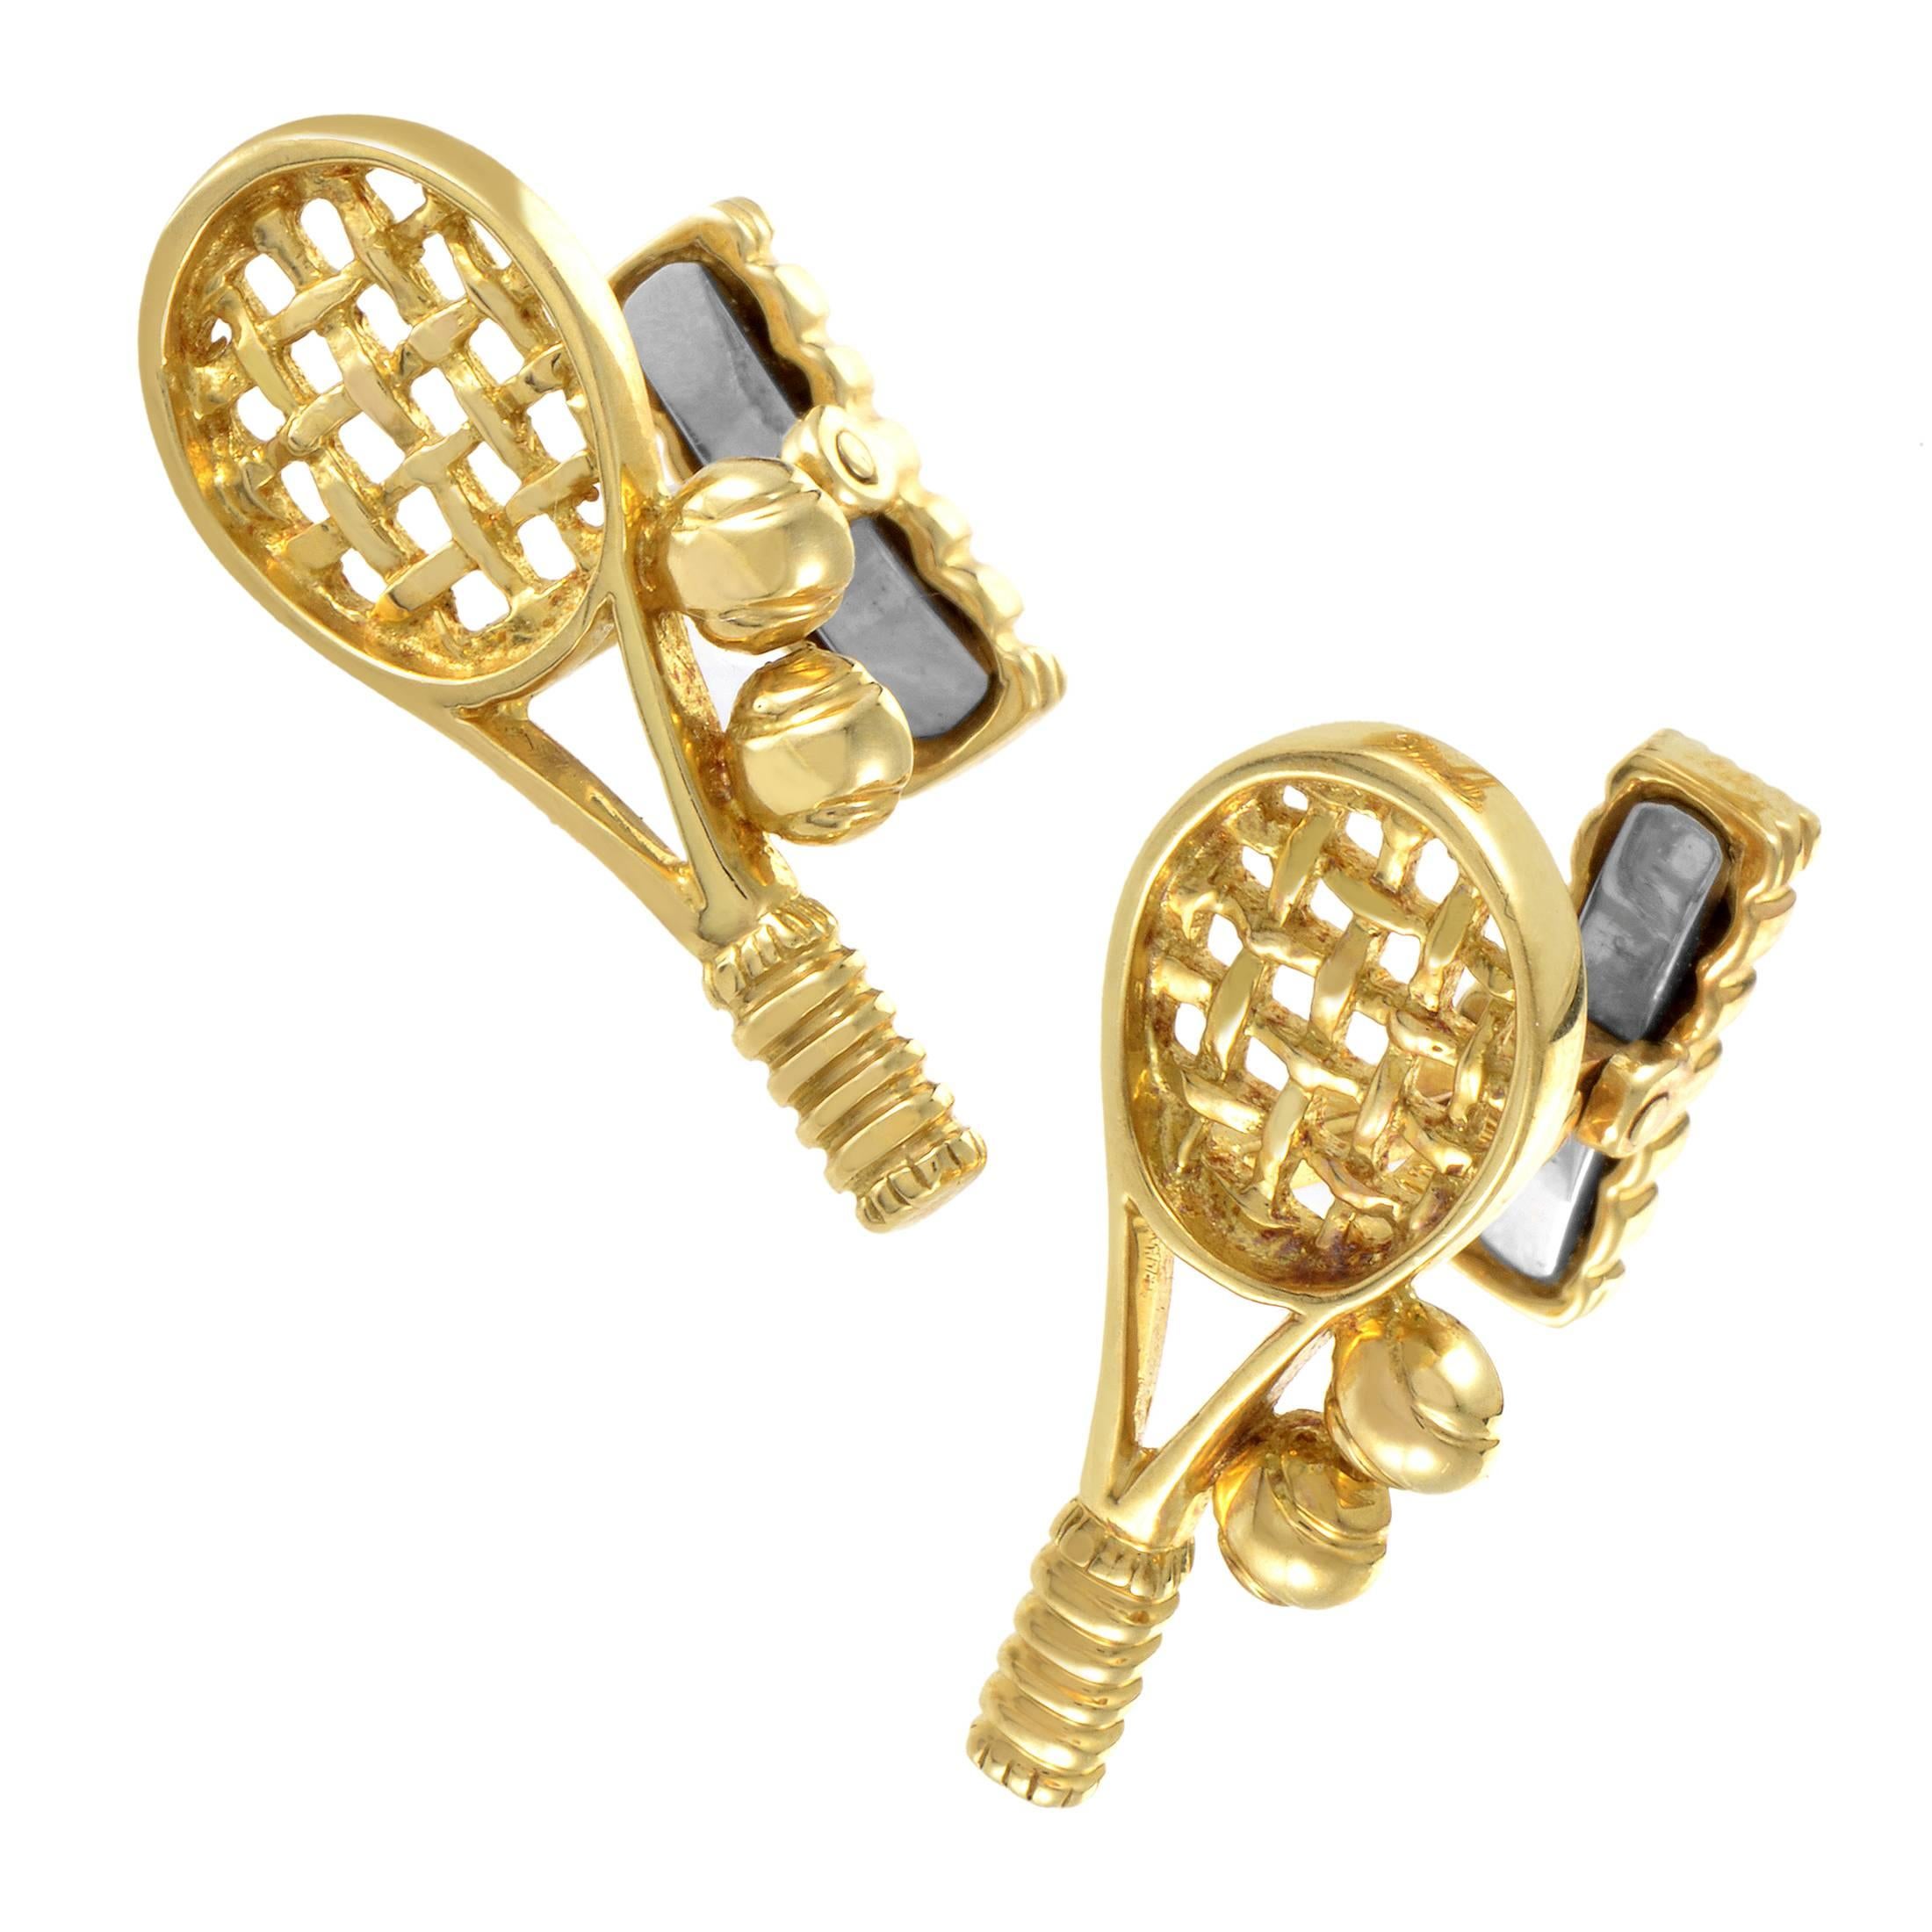 Tiffany & Co. Tennis Ball and Racket Gold Cufflinks